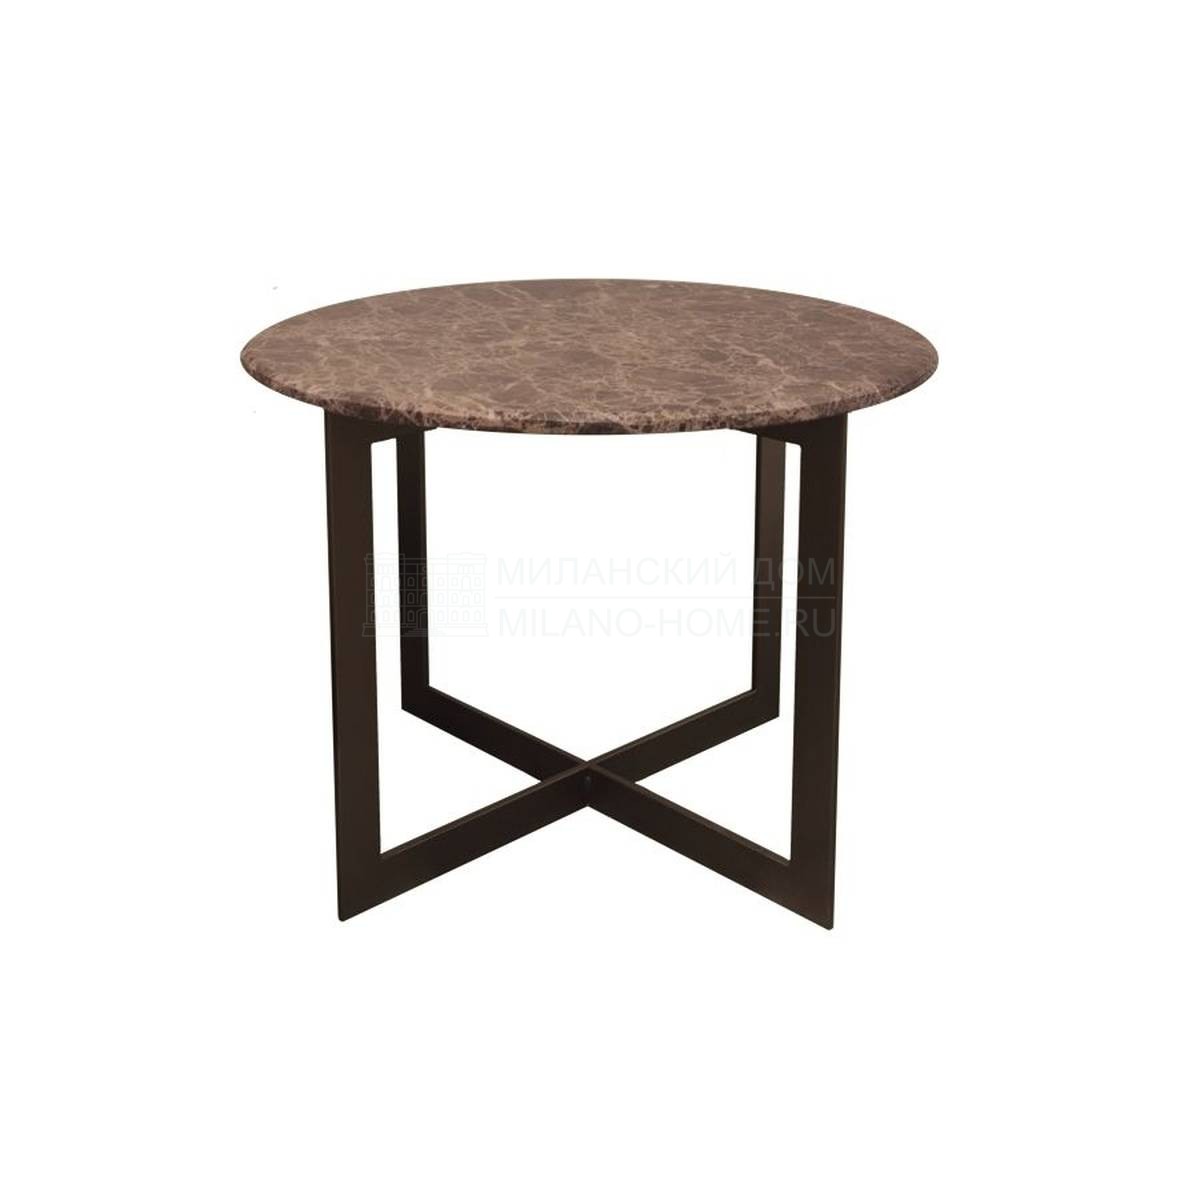 Кофейный столик H-550221 coffee table из Испании фабрики GUADARTE